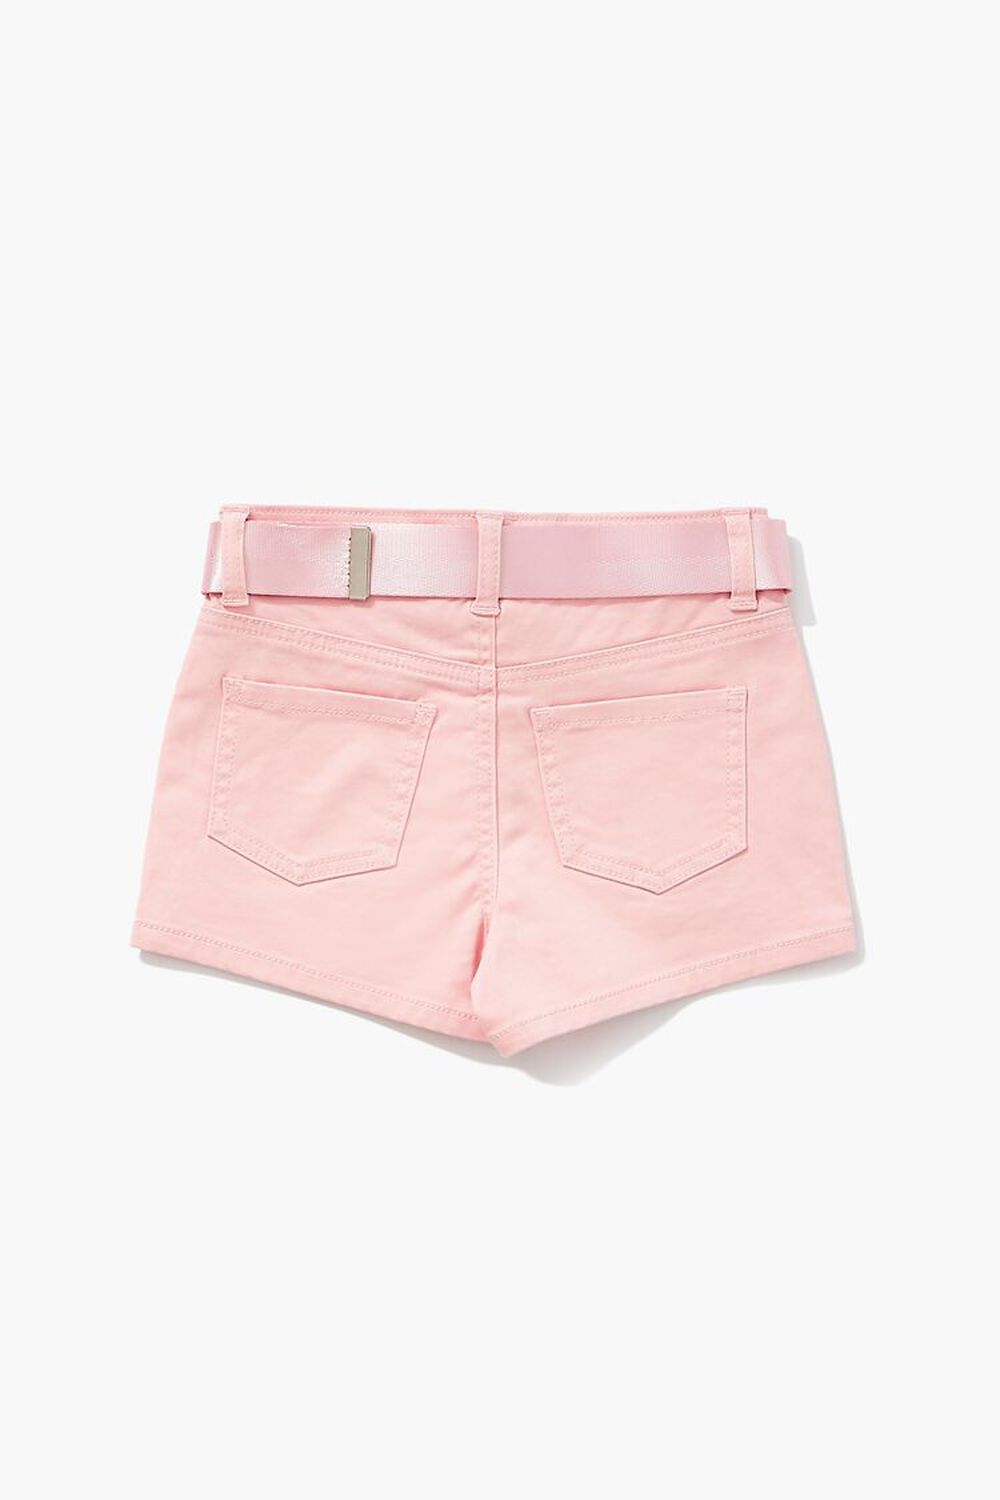 PINK Girls Patch-Pocket Shorts (Kids), image 2